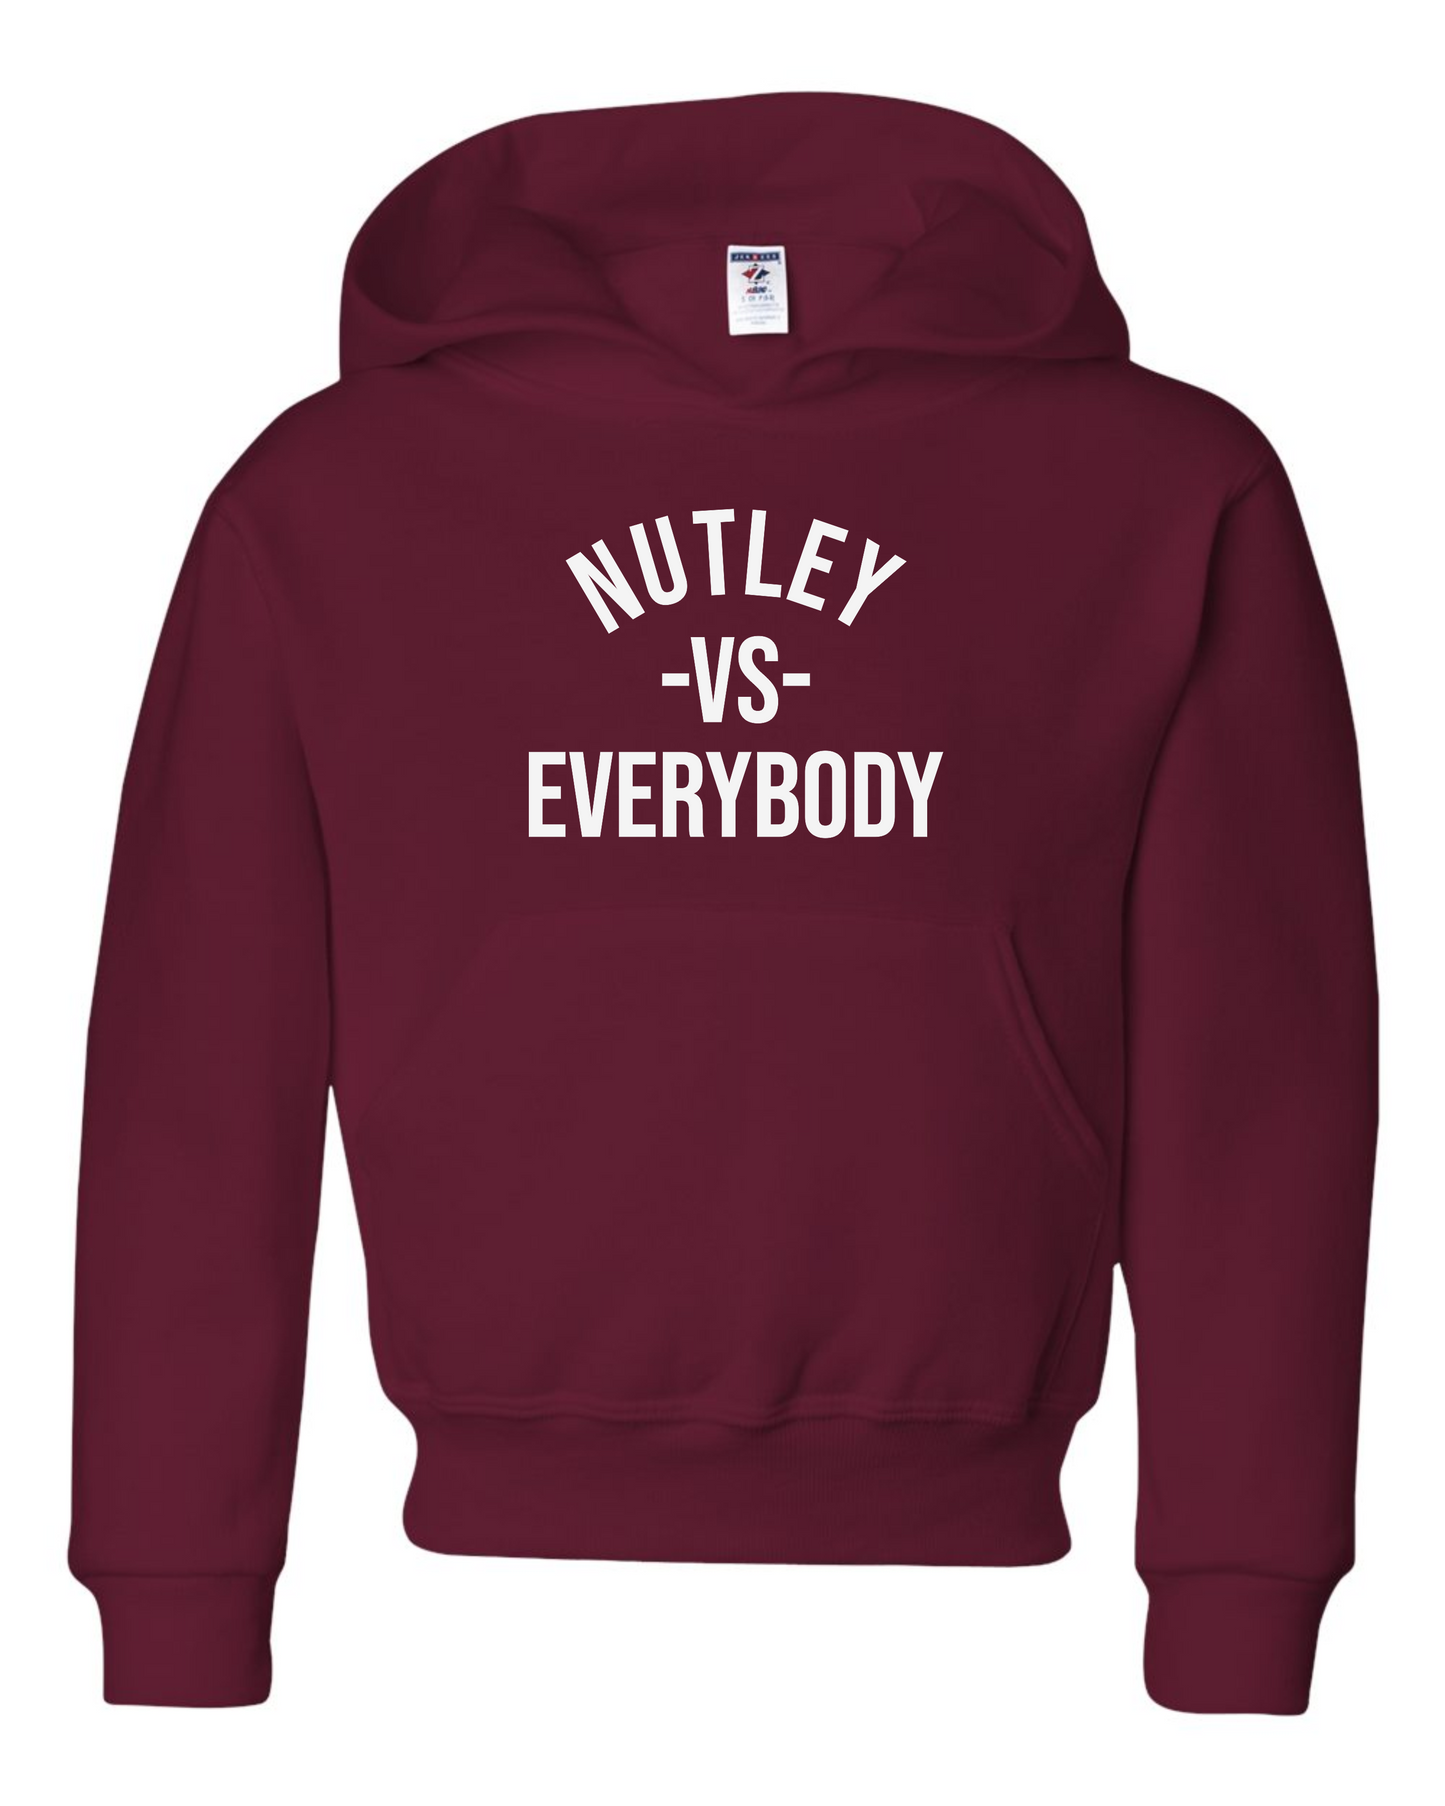 Nutley vs Everybody Hooded Sweatshirt - Maroon